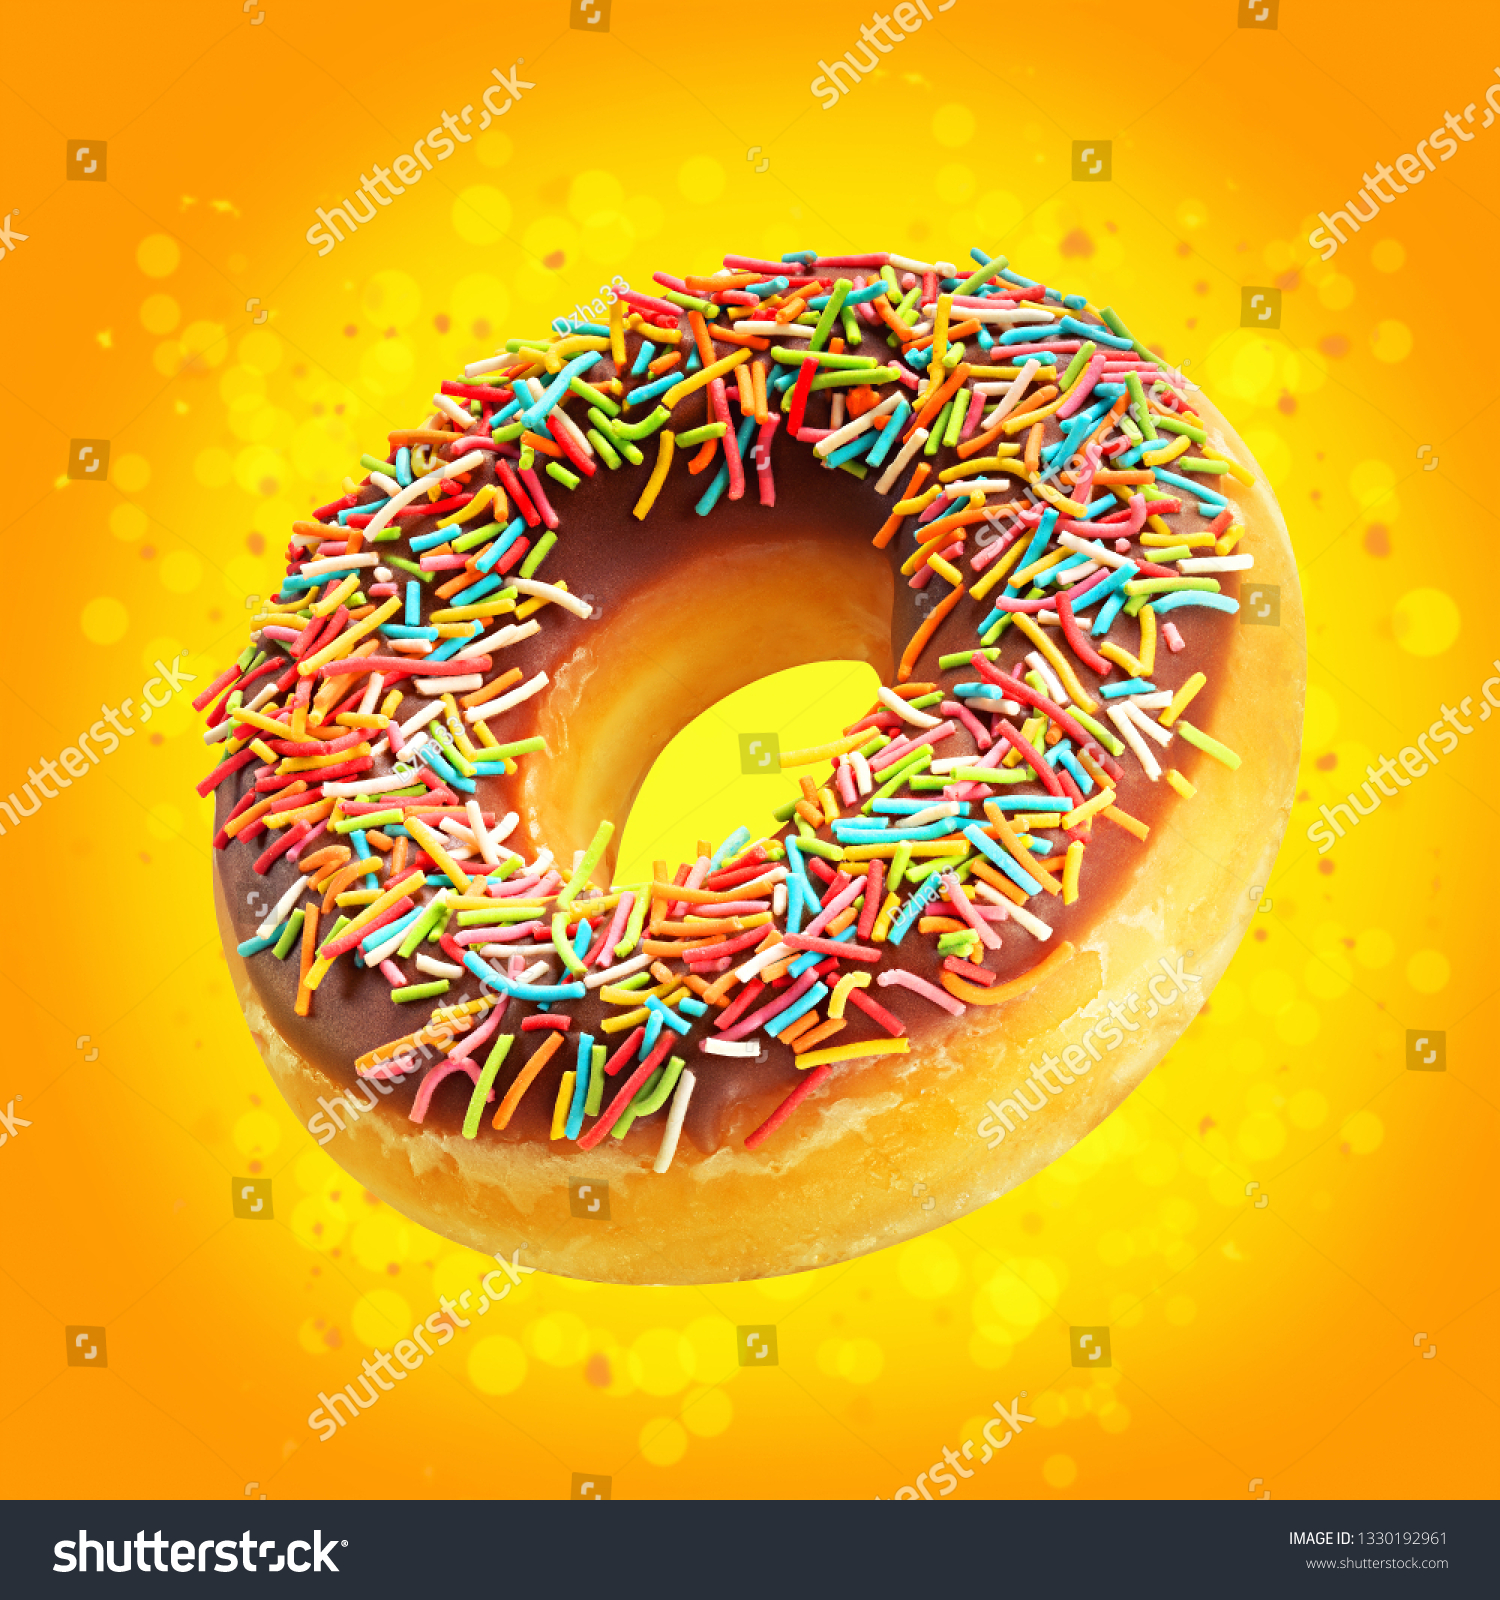 Download Design Mockup Donut Closeup Chocolate Glaze Stock Photo Edit Now 1330192961